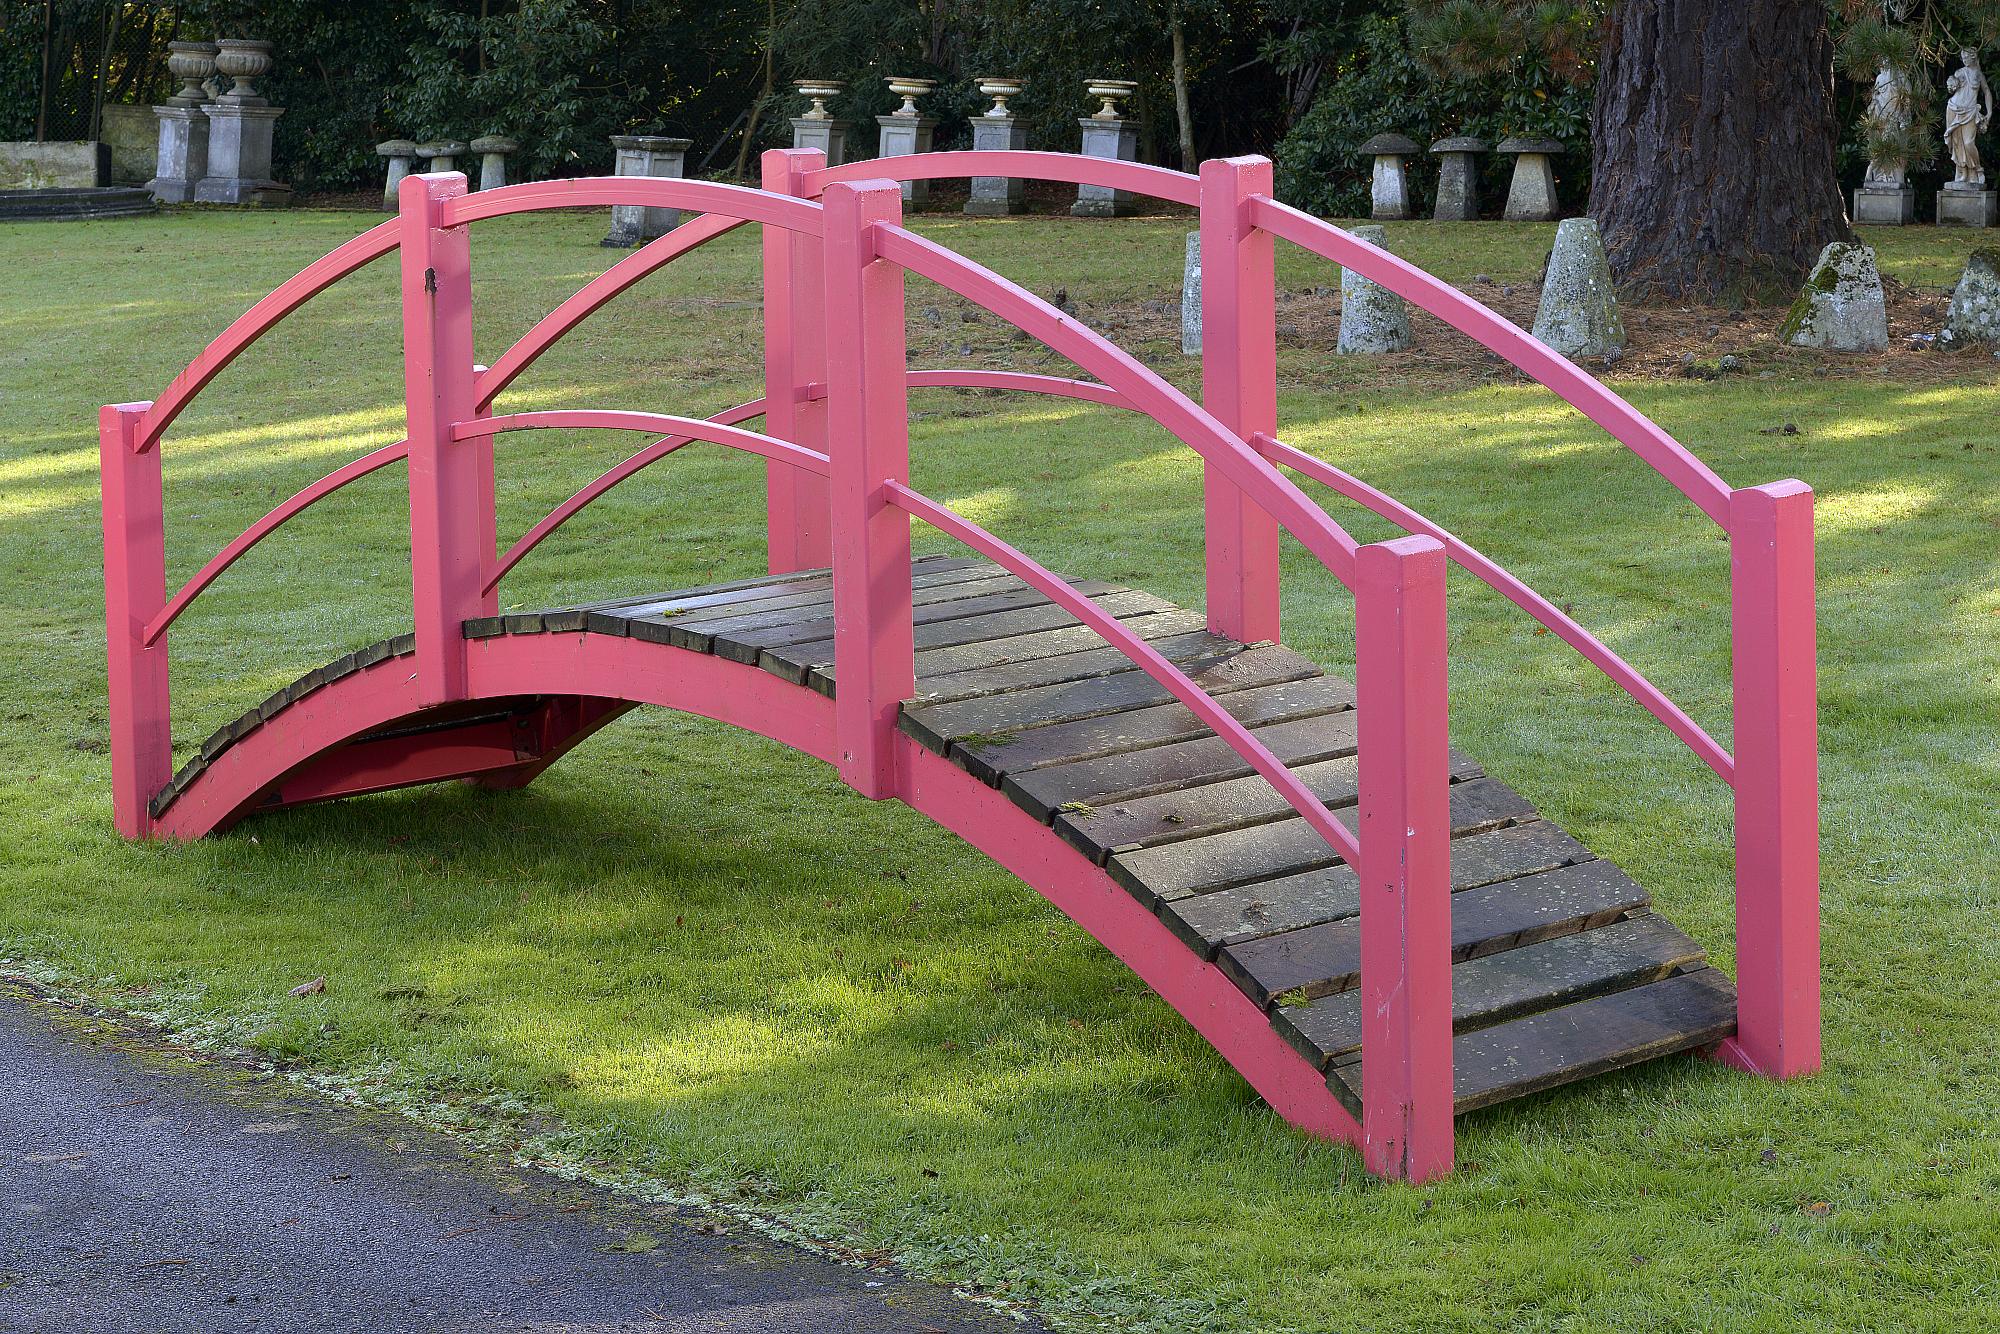 Garden Structure: A cast iron bridge with wooden slats145cm high by 400cm long by 96cm wide